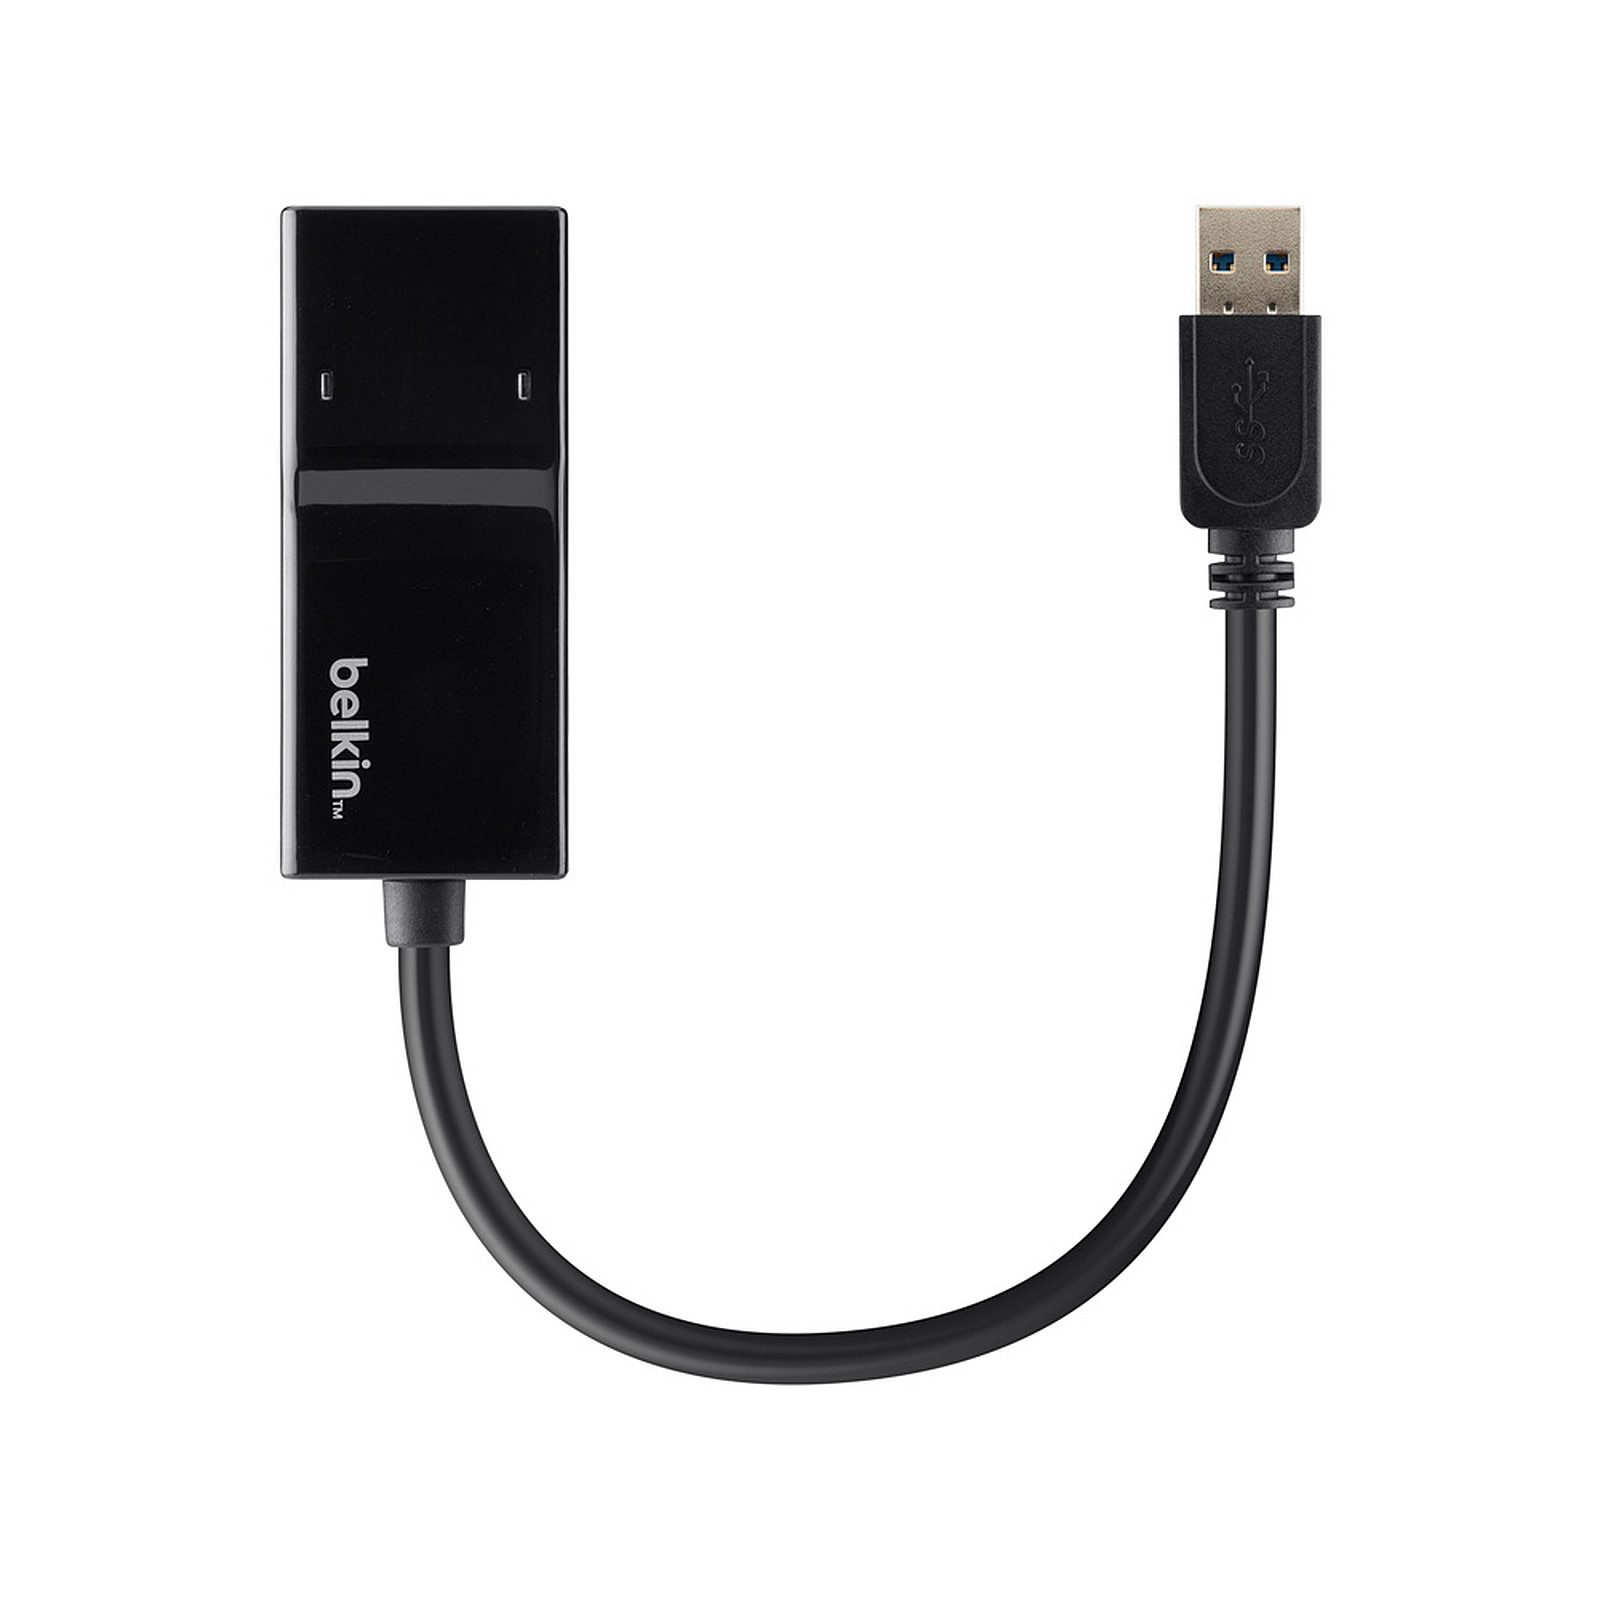 Belkin Adaptateur USB 3.0 vers Gigabit Ethernet - USB Belkin